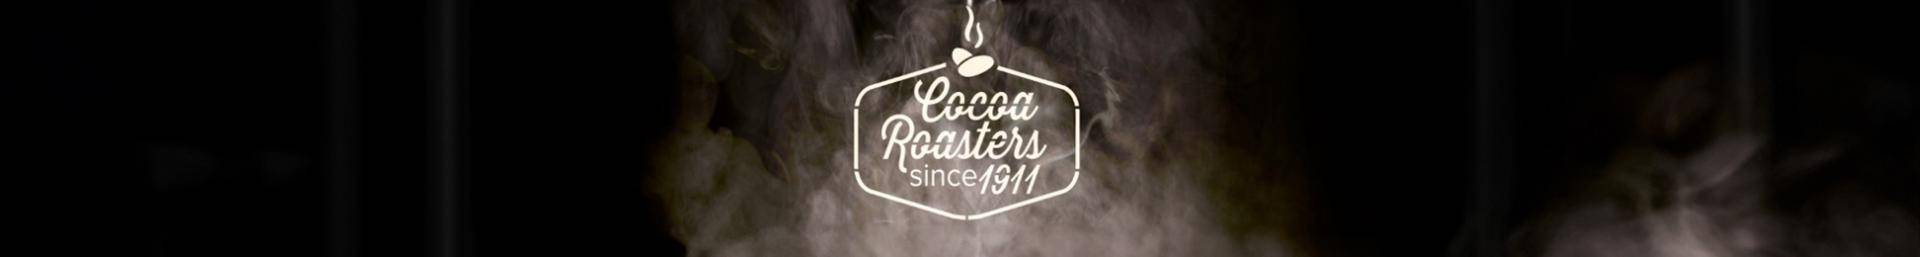 Cocoa roasters callebaut